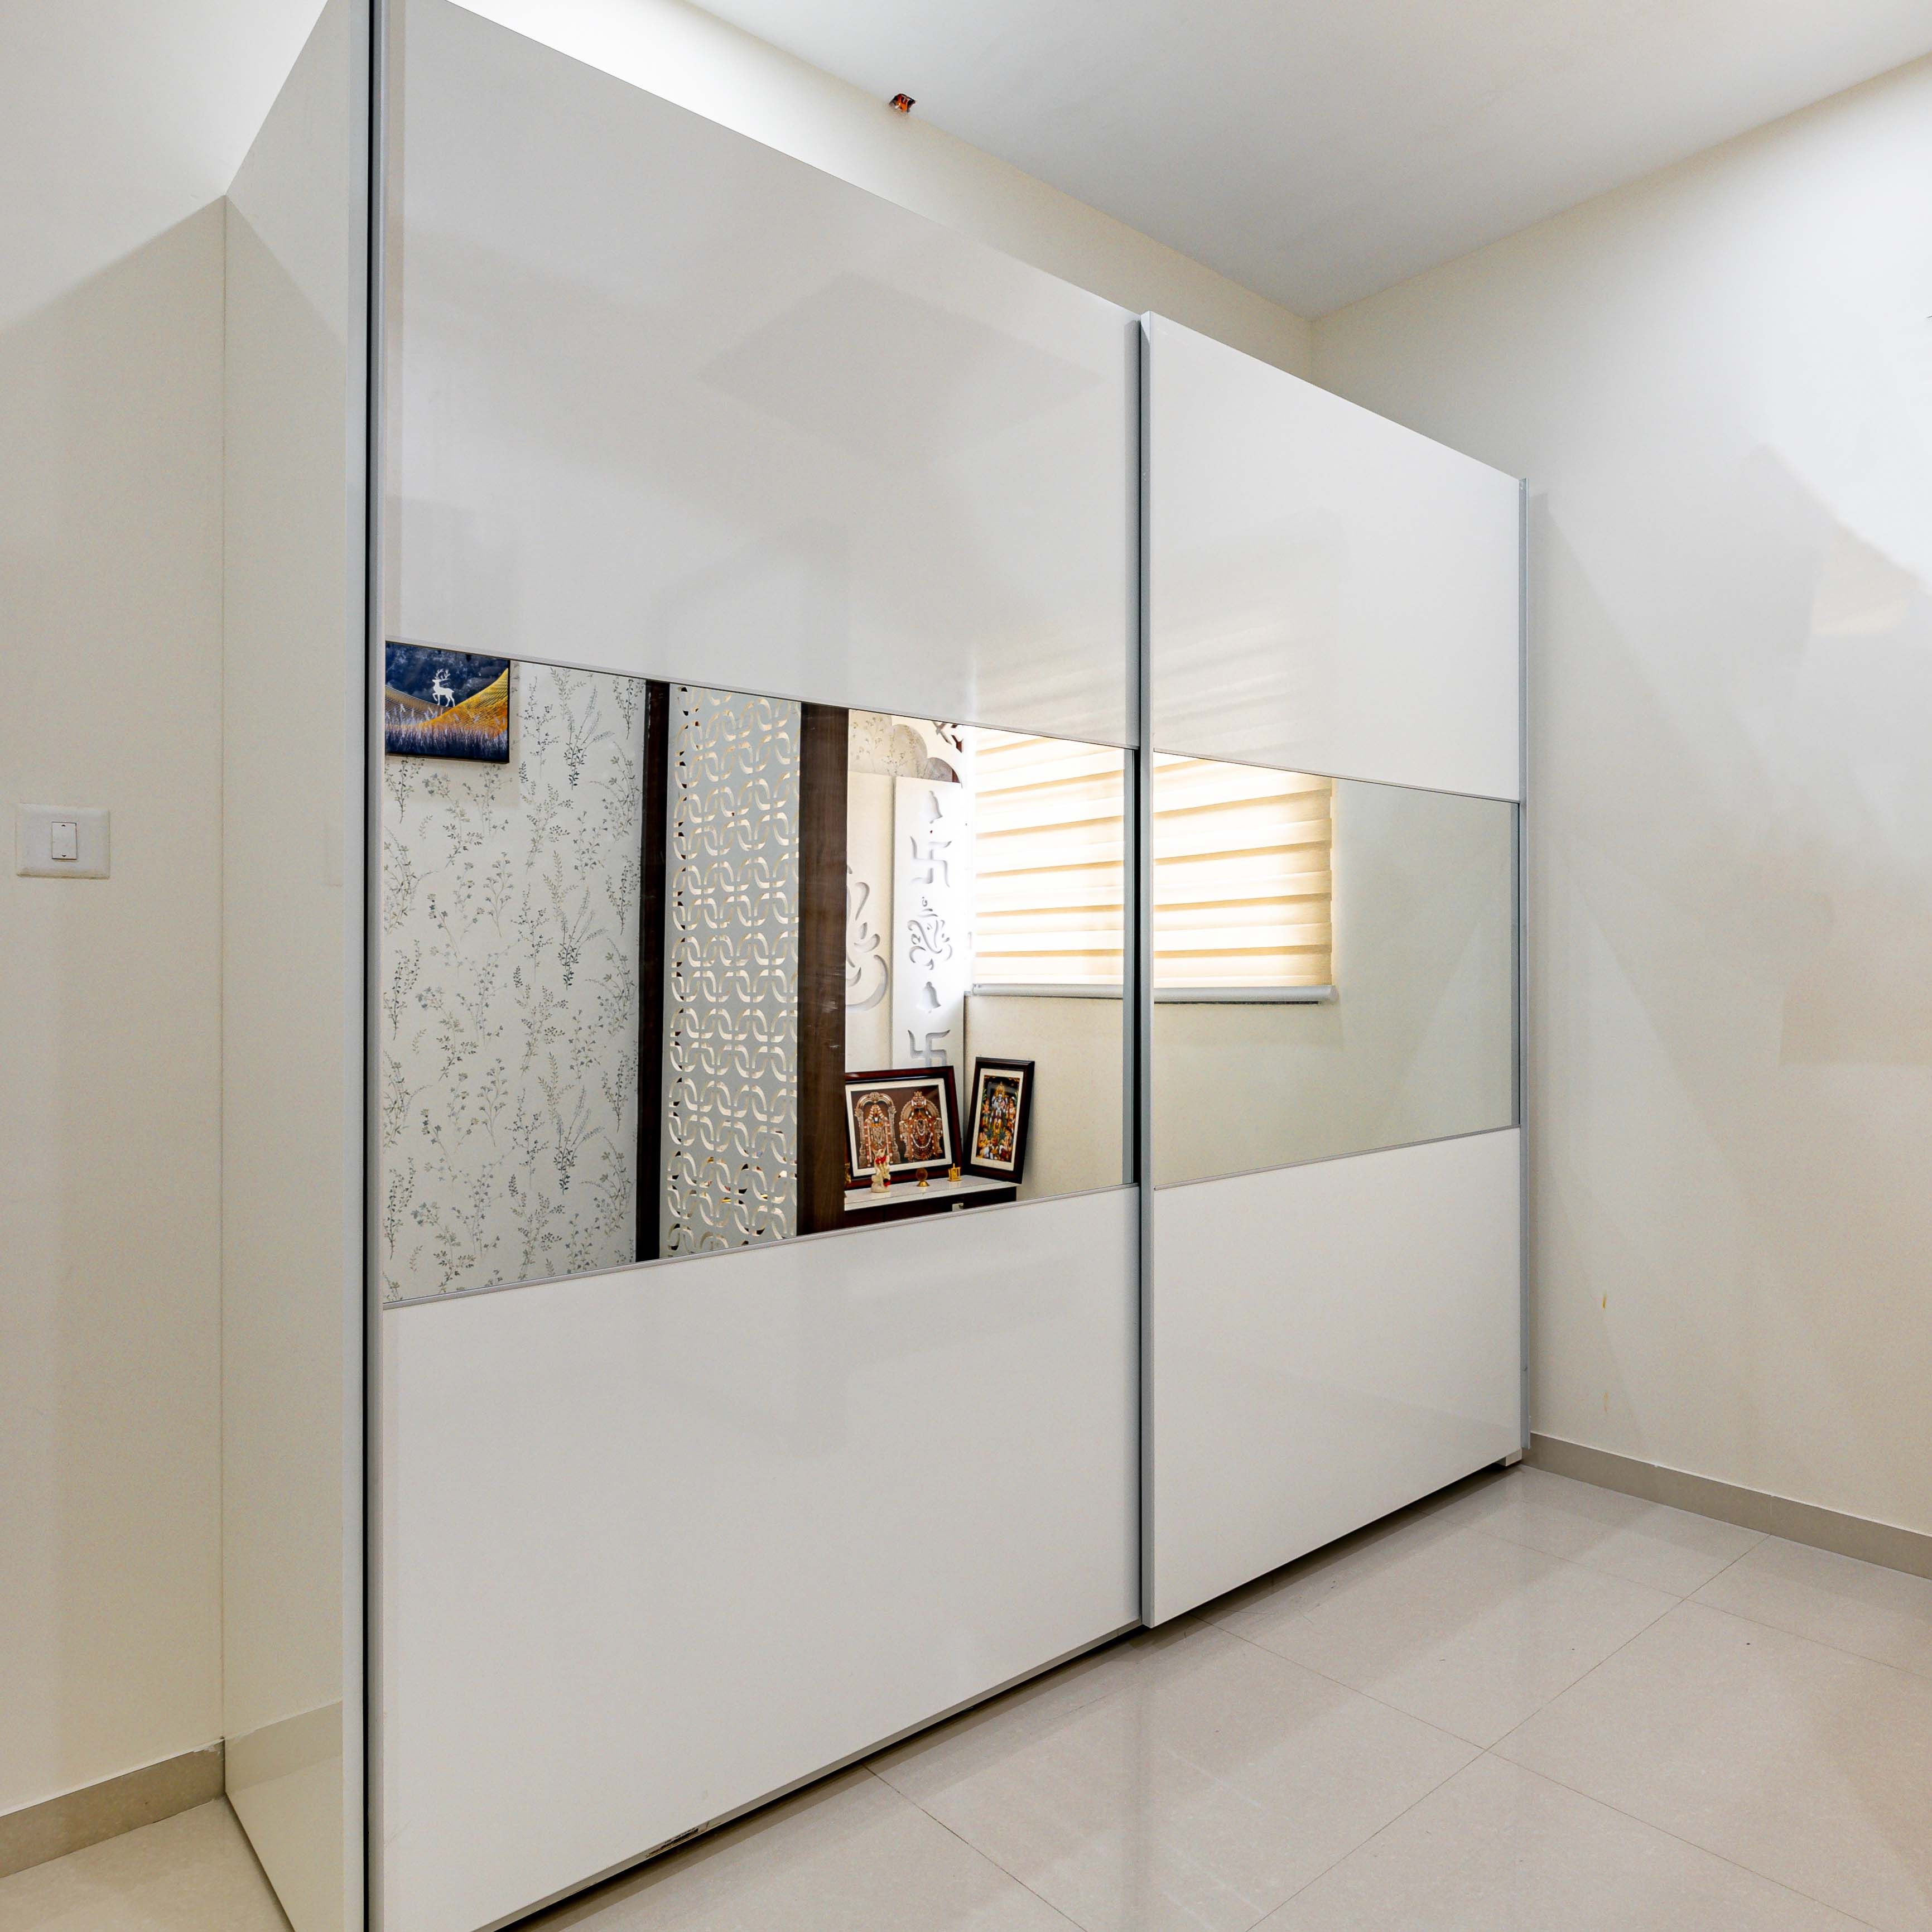 Modern 2-Door White Sliding Wardrobe Design With Mirror For Bedrooms